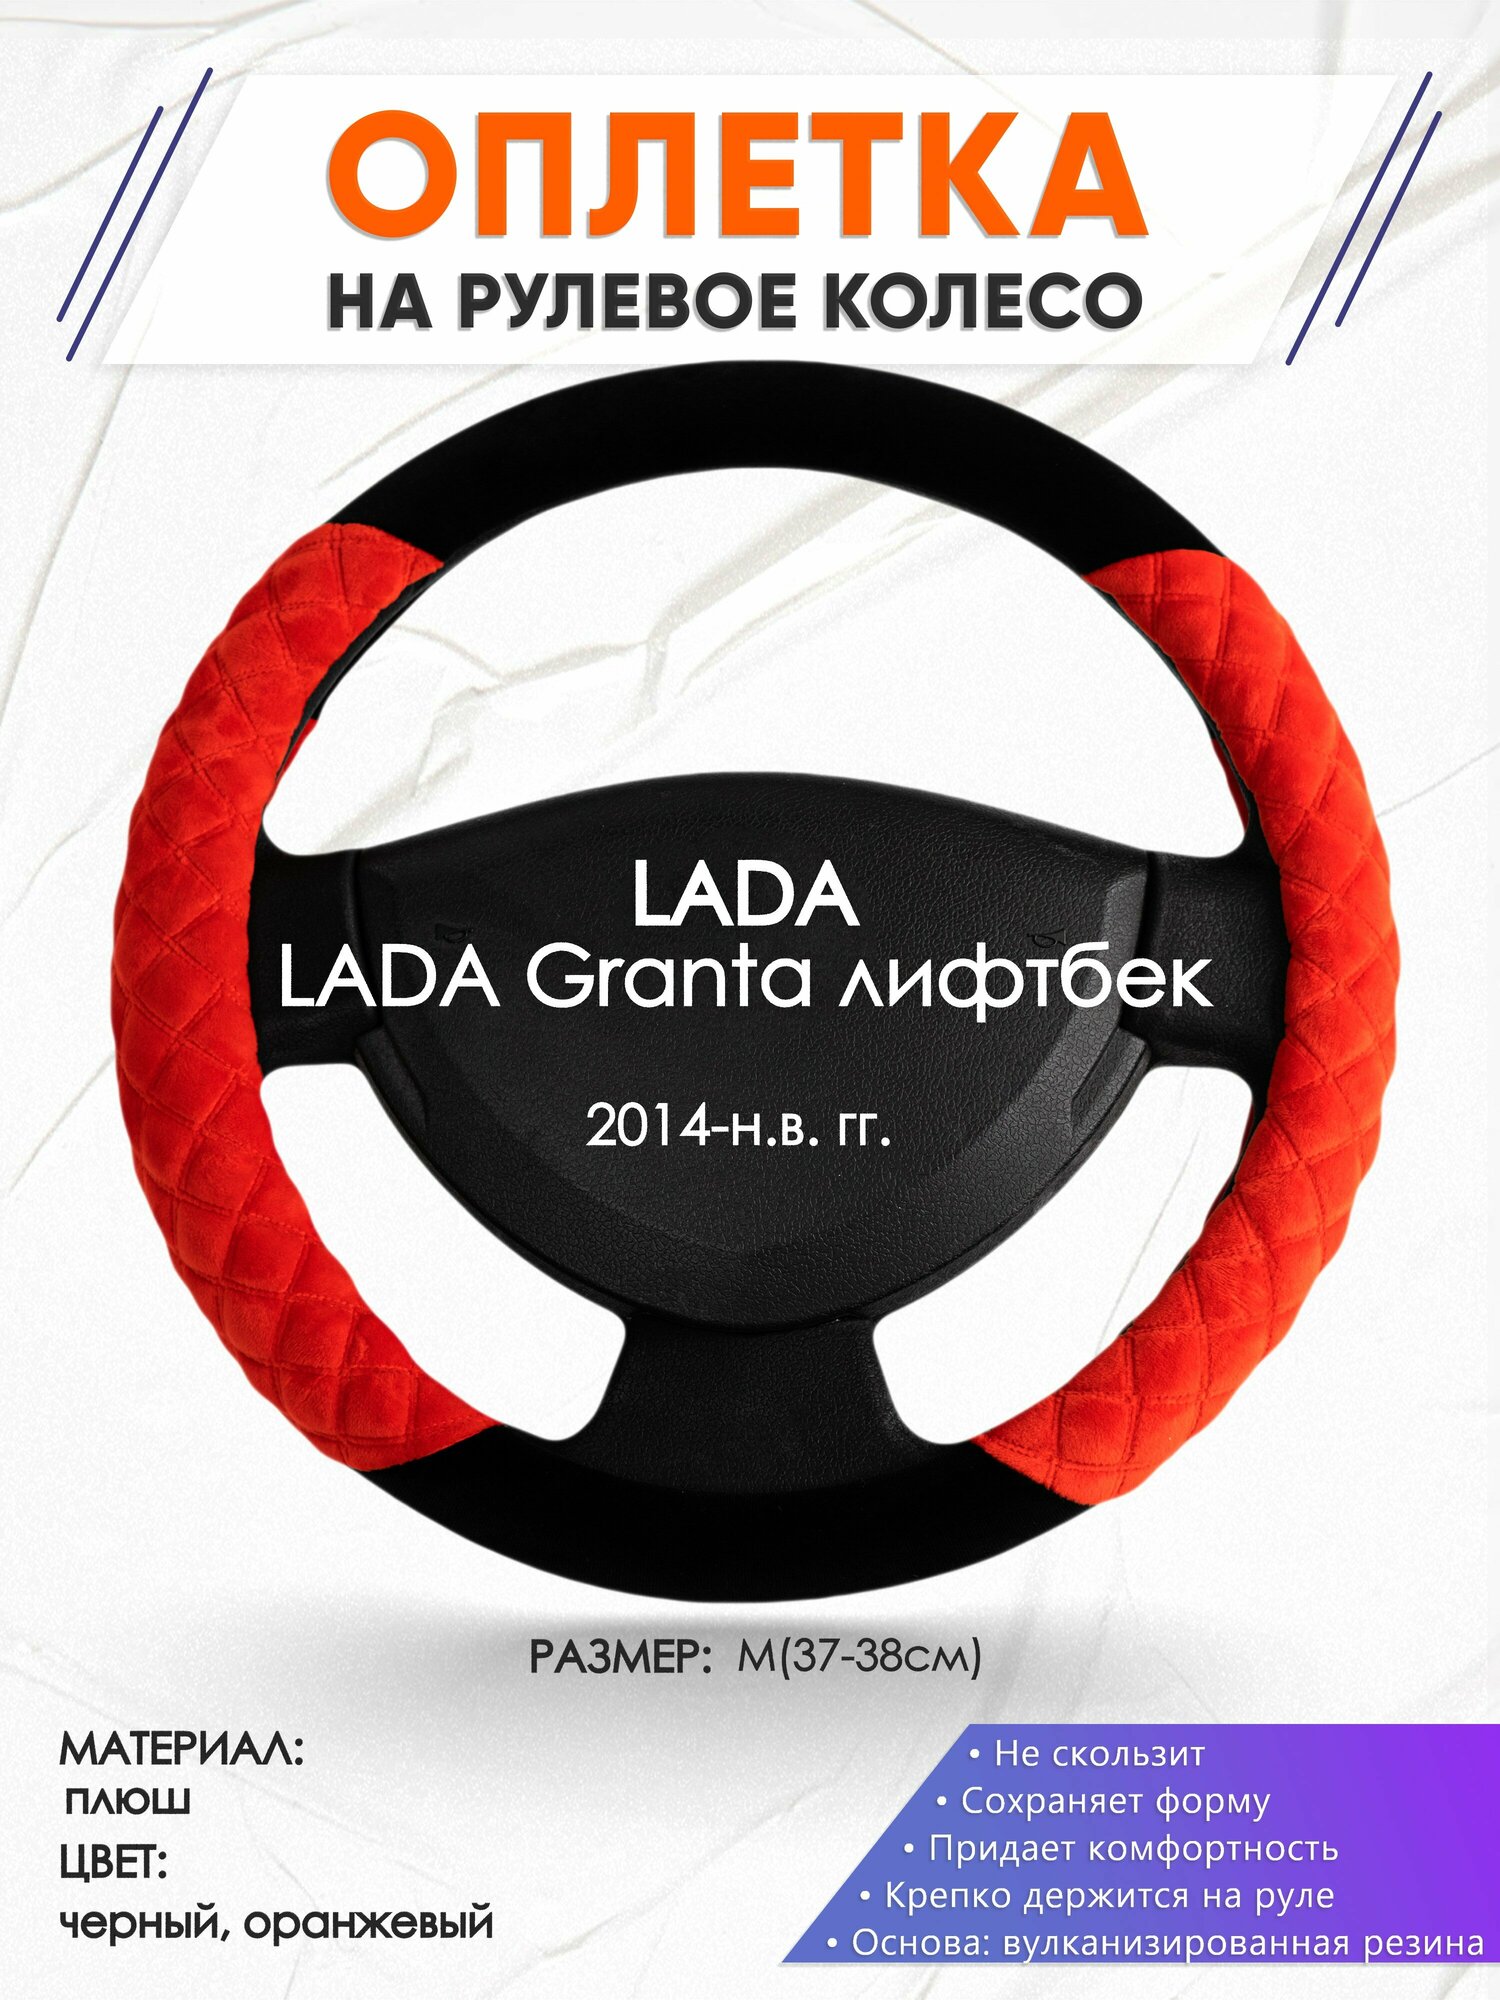 Оплетка наруль для LADA Granta лифтбек(Лада Гранта) 2014-н. в. годов выпуска, размер M(37-38см), Замша 37